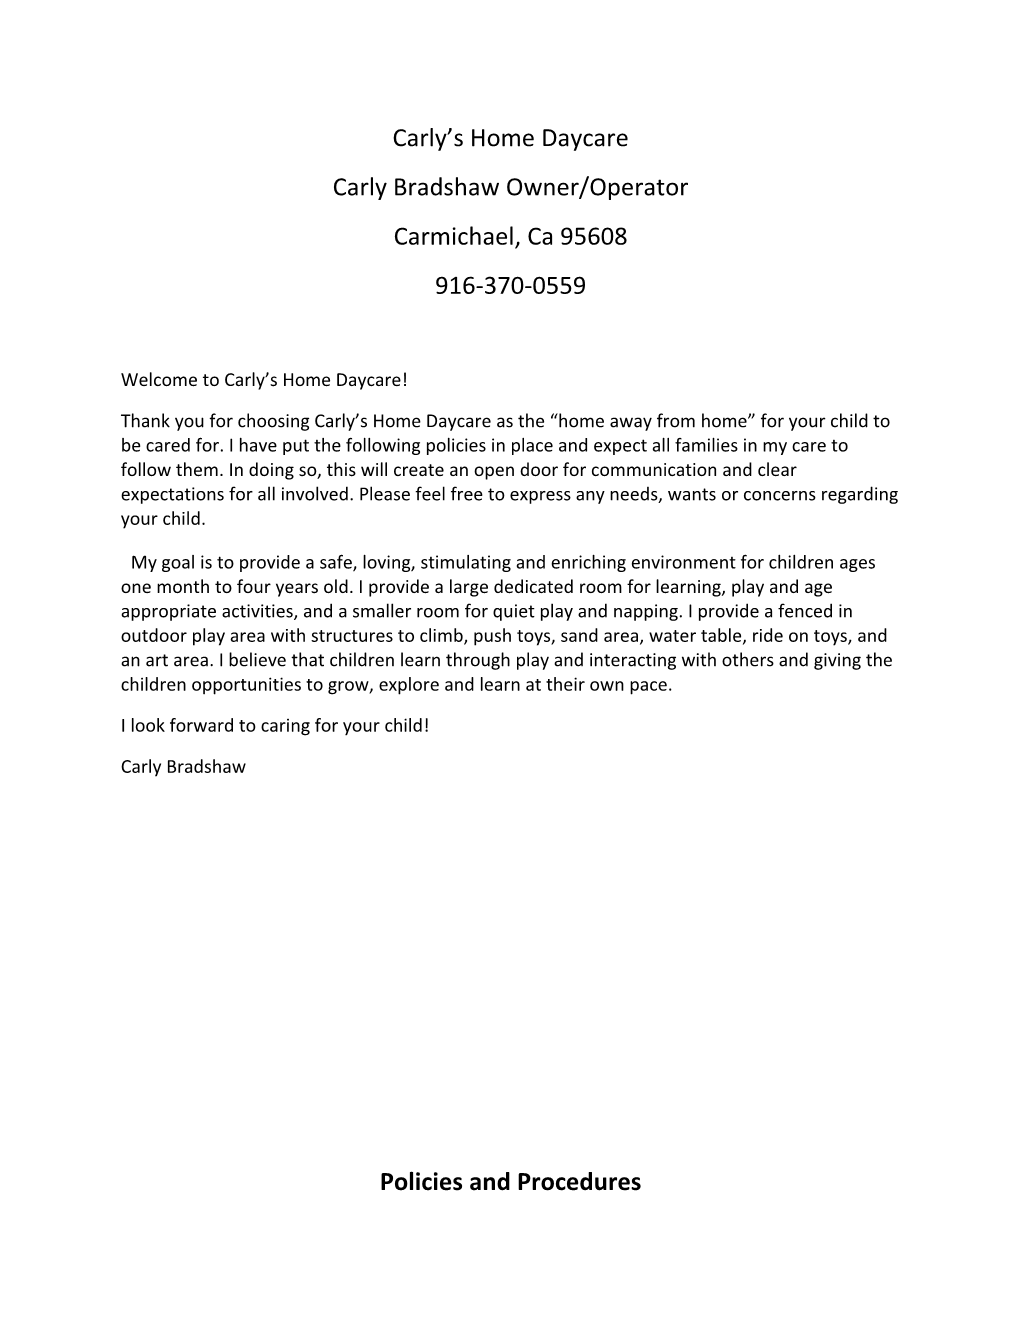 Carly Bradshaw Owner/Operator